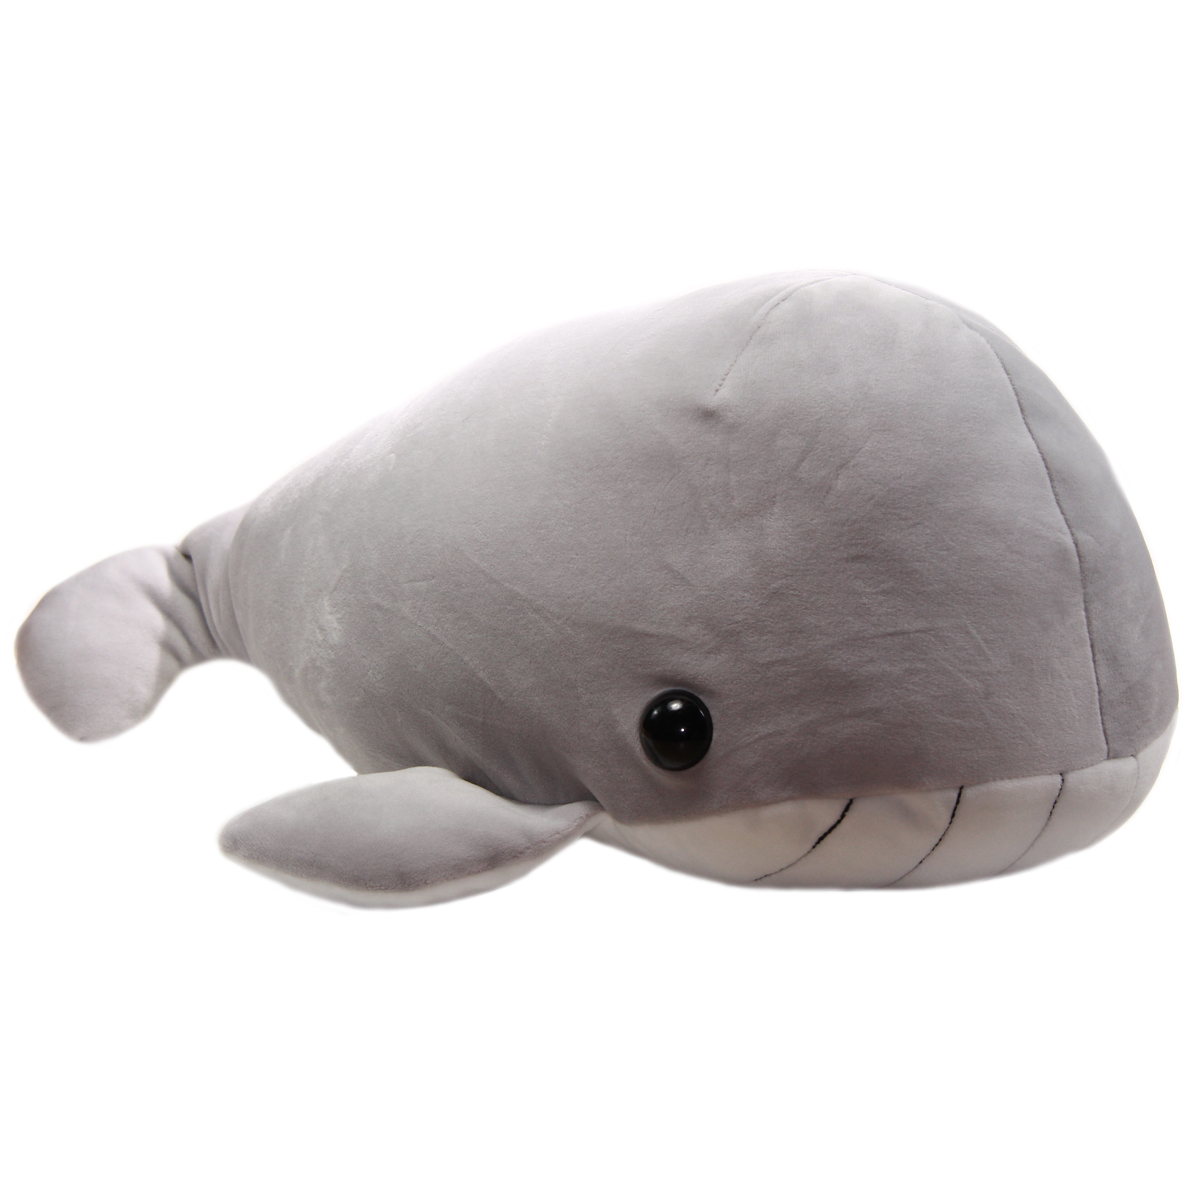 Aquarium Collection Whale Plush Toy Grey White BIG Size 20 Inches